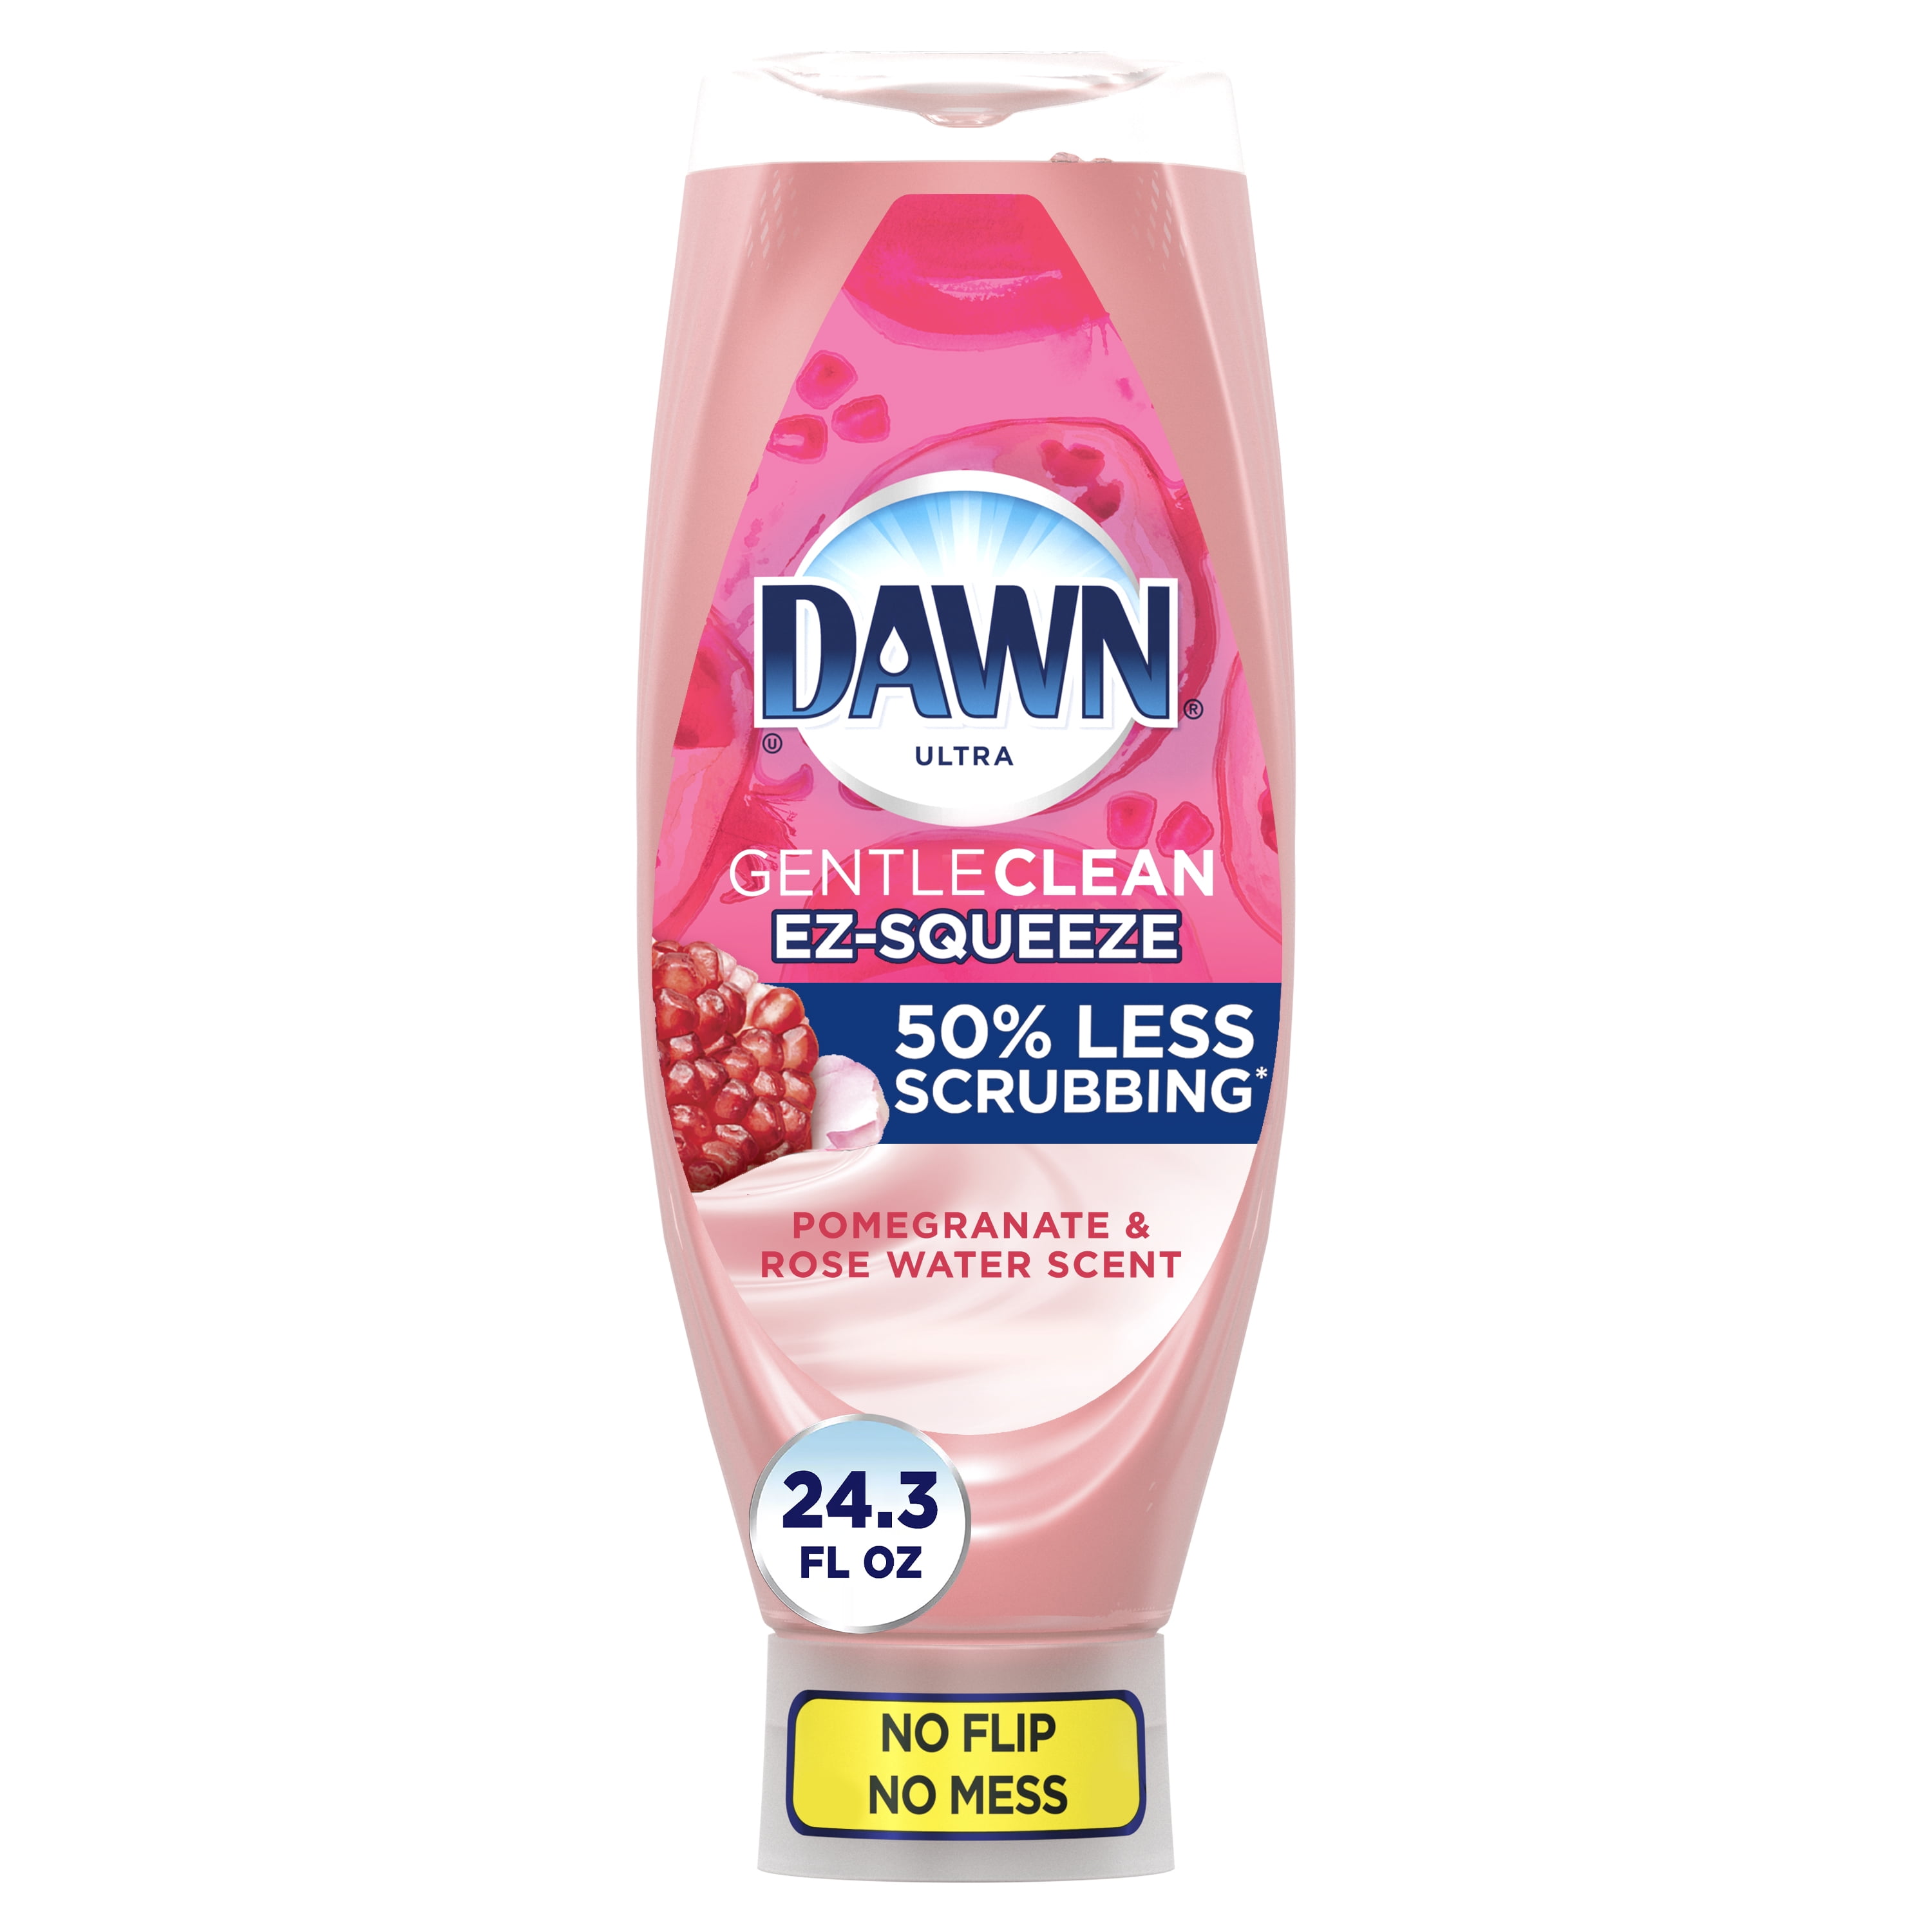 Dawn Free & Clear Power Wash Dish Spray, Dish Soap, Pear Scent